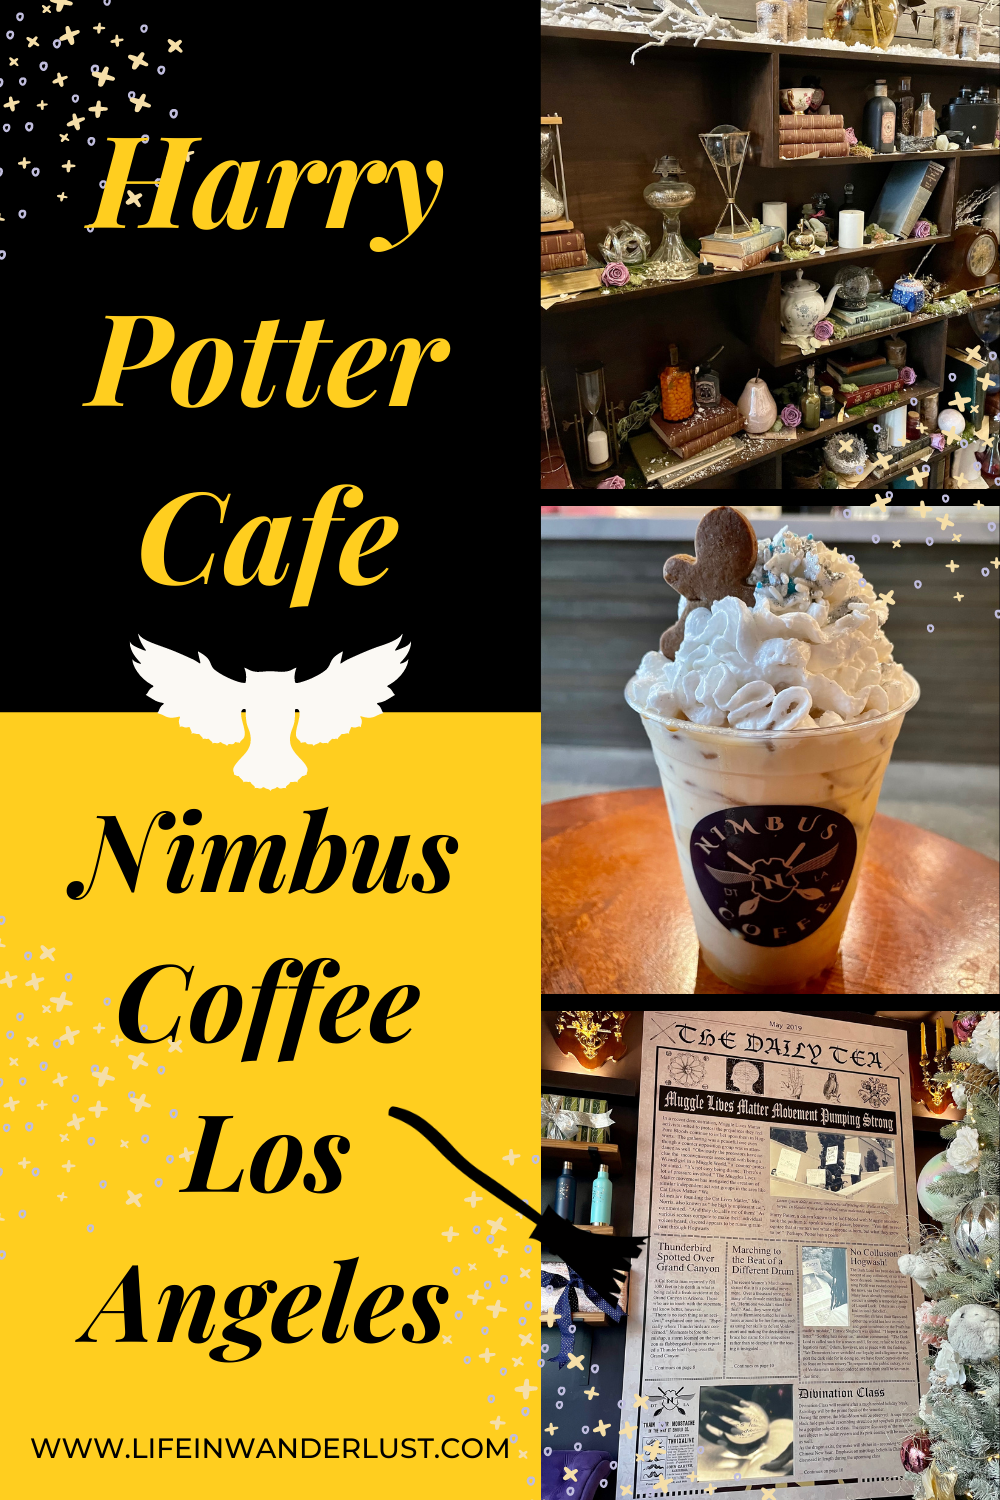 Harry Potter Themed Coffee Shop Pinterest